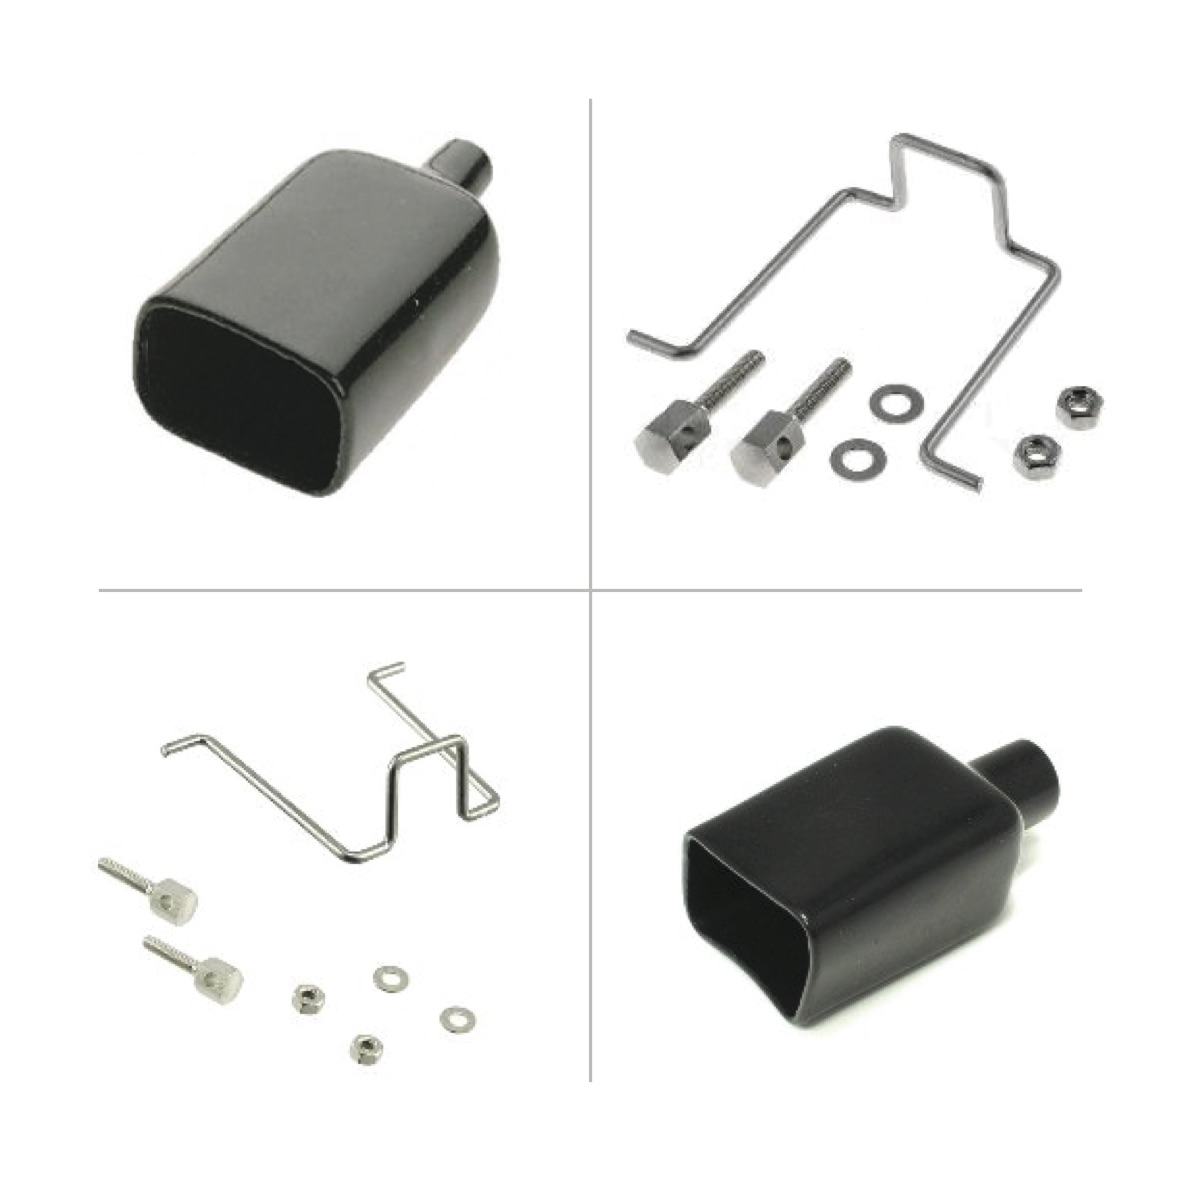 Bulgin IEC Connector Accessories